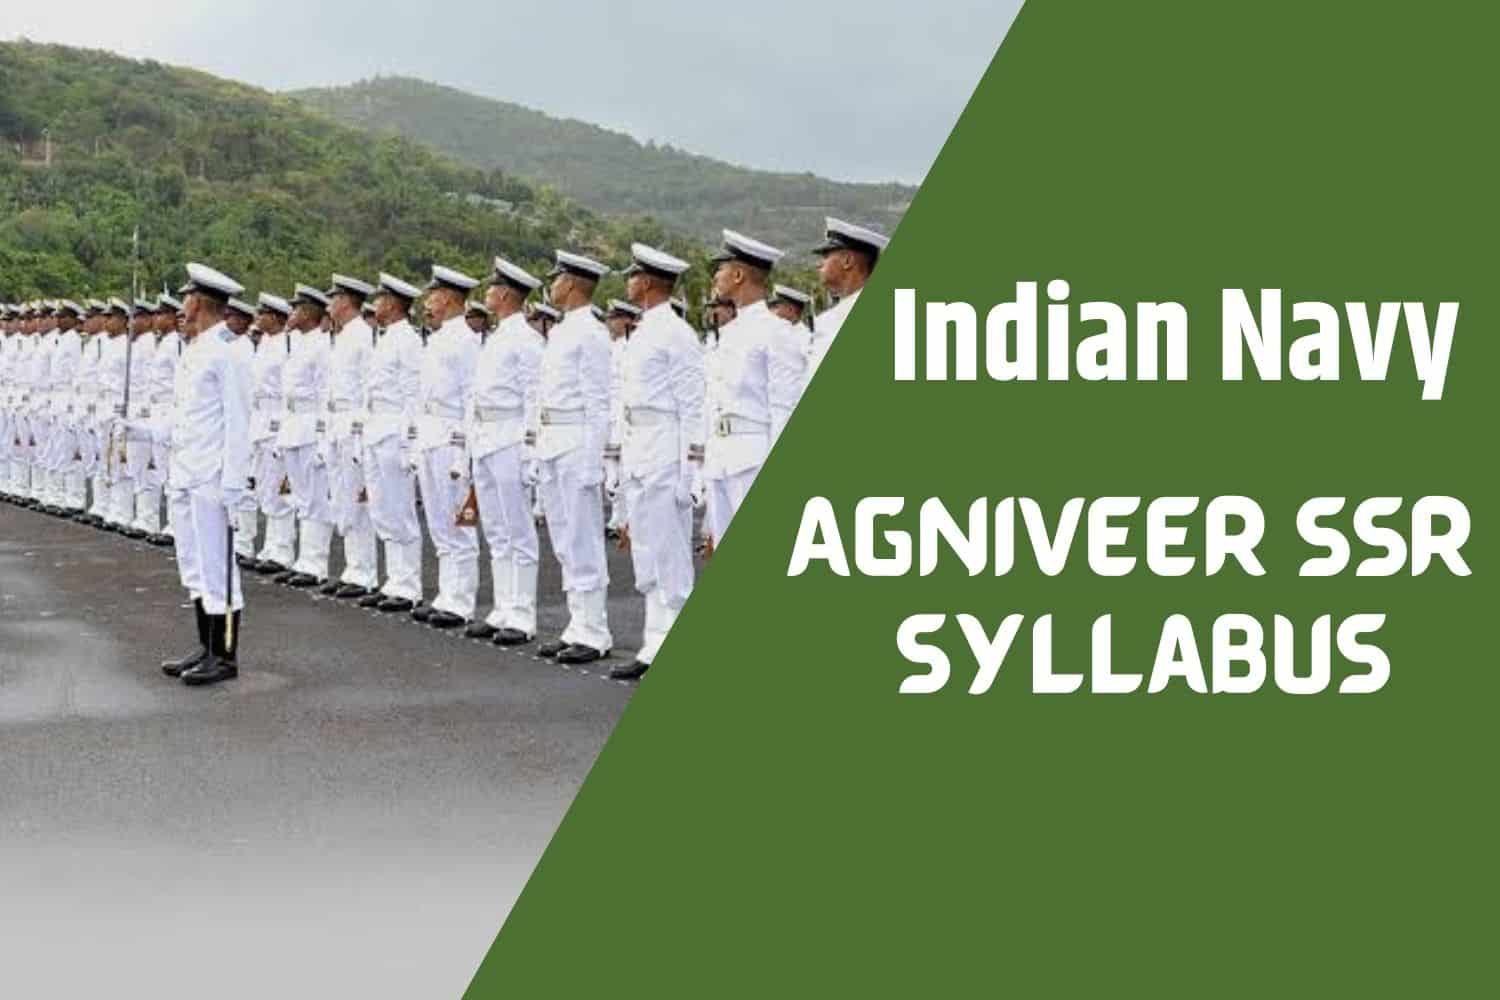 Indian Navy Agniveer SSR Syllabus 2022 In Hindi | इंडियन नेवी अग्निवीर सिलेबस इन हिंदी